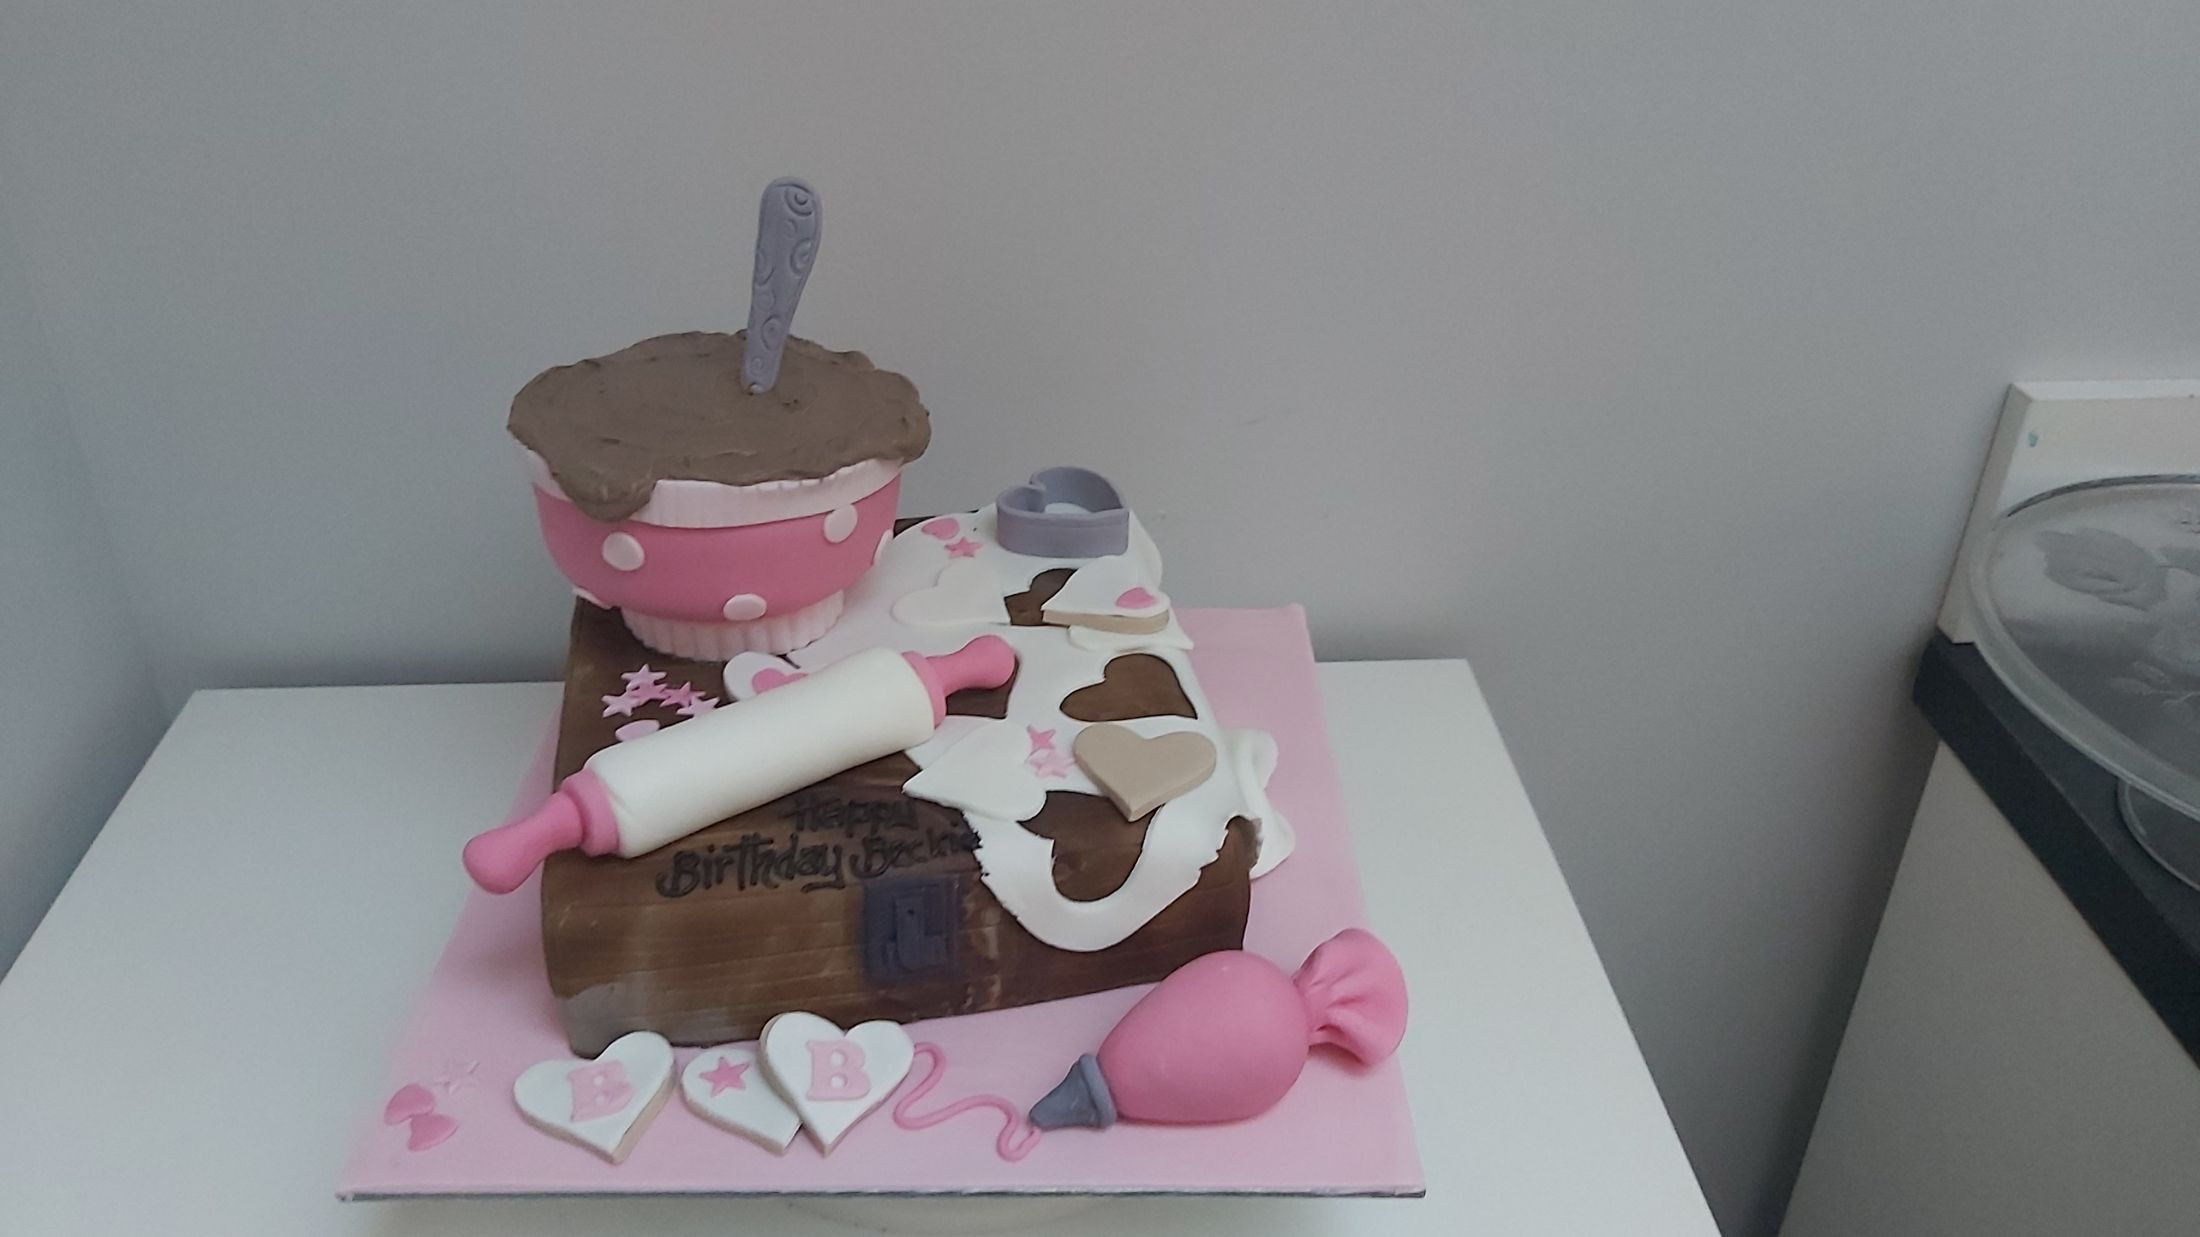 Cake Decorating - Decorate a Baking Themed Cake